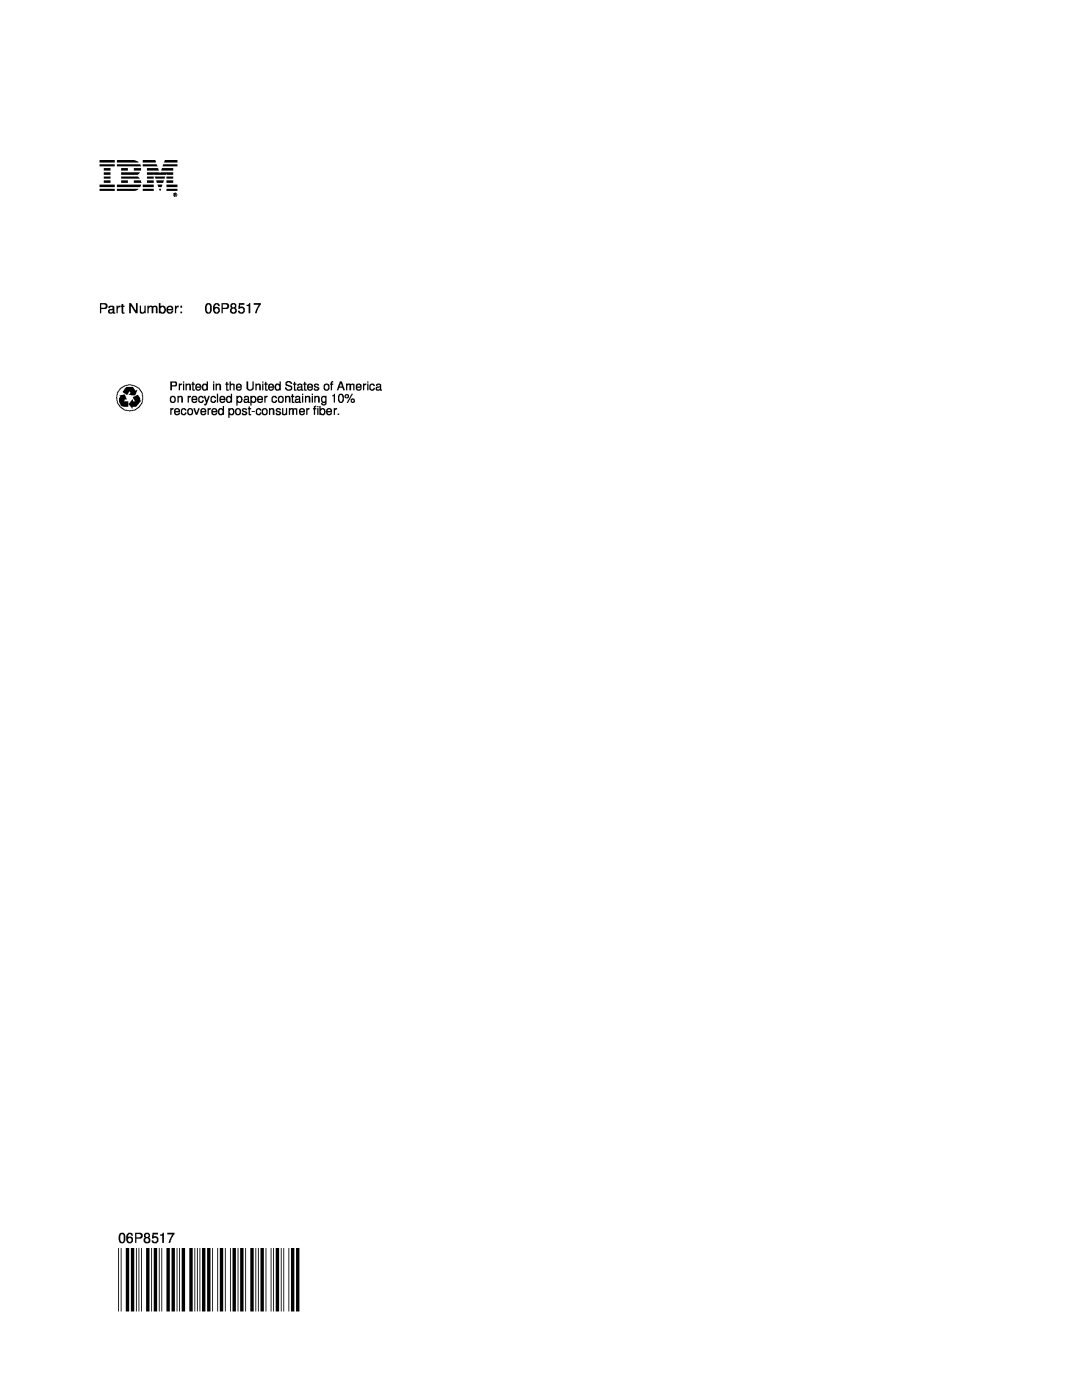 IBM x Series 200 manual 0406P8517, Ibm@, Part Number 06P8517 